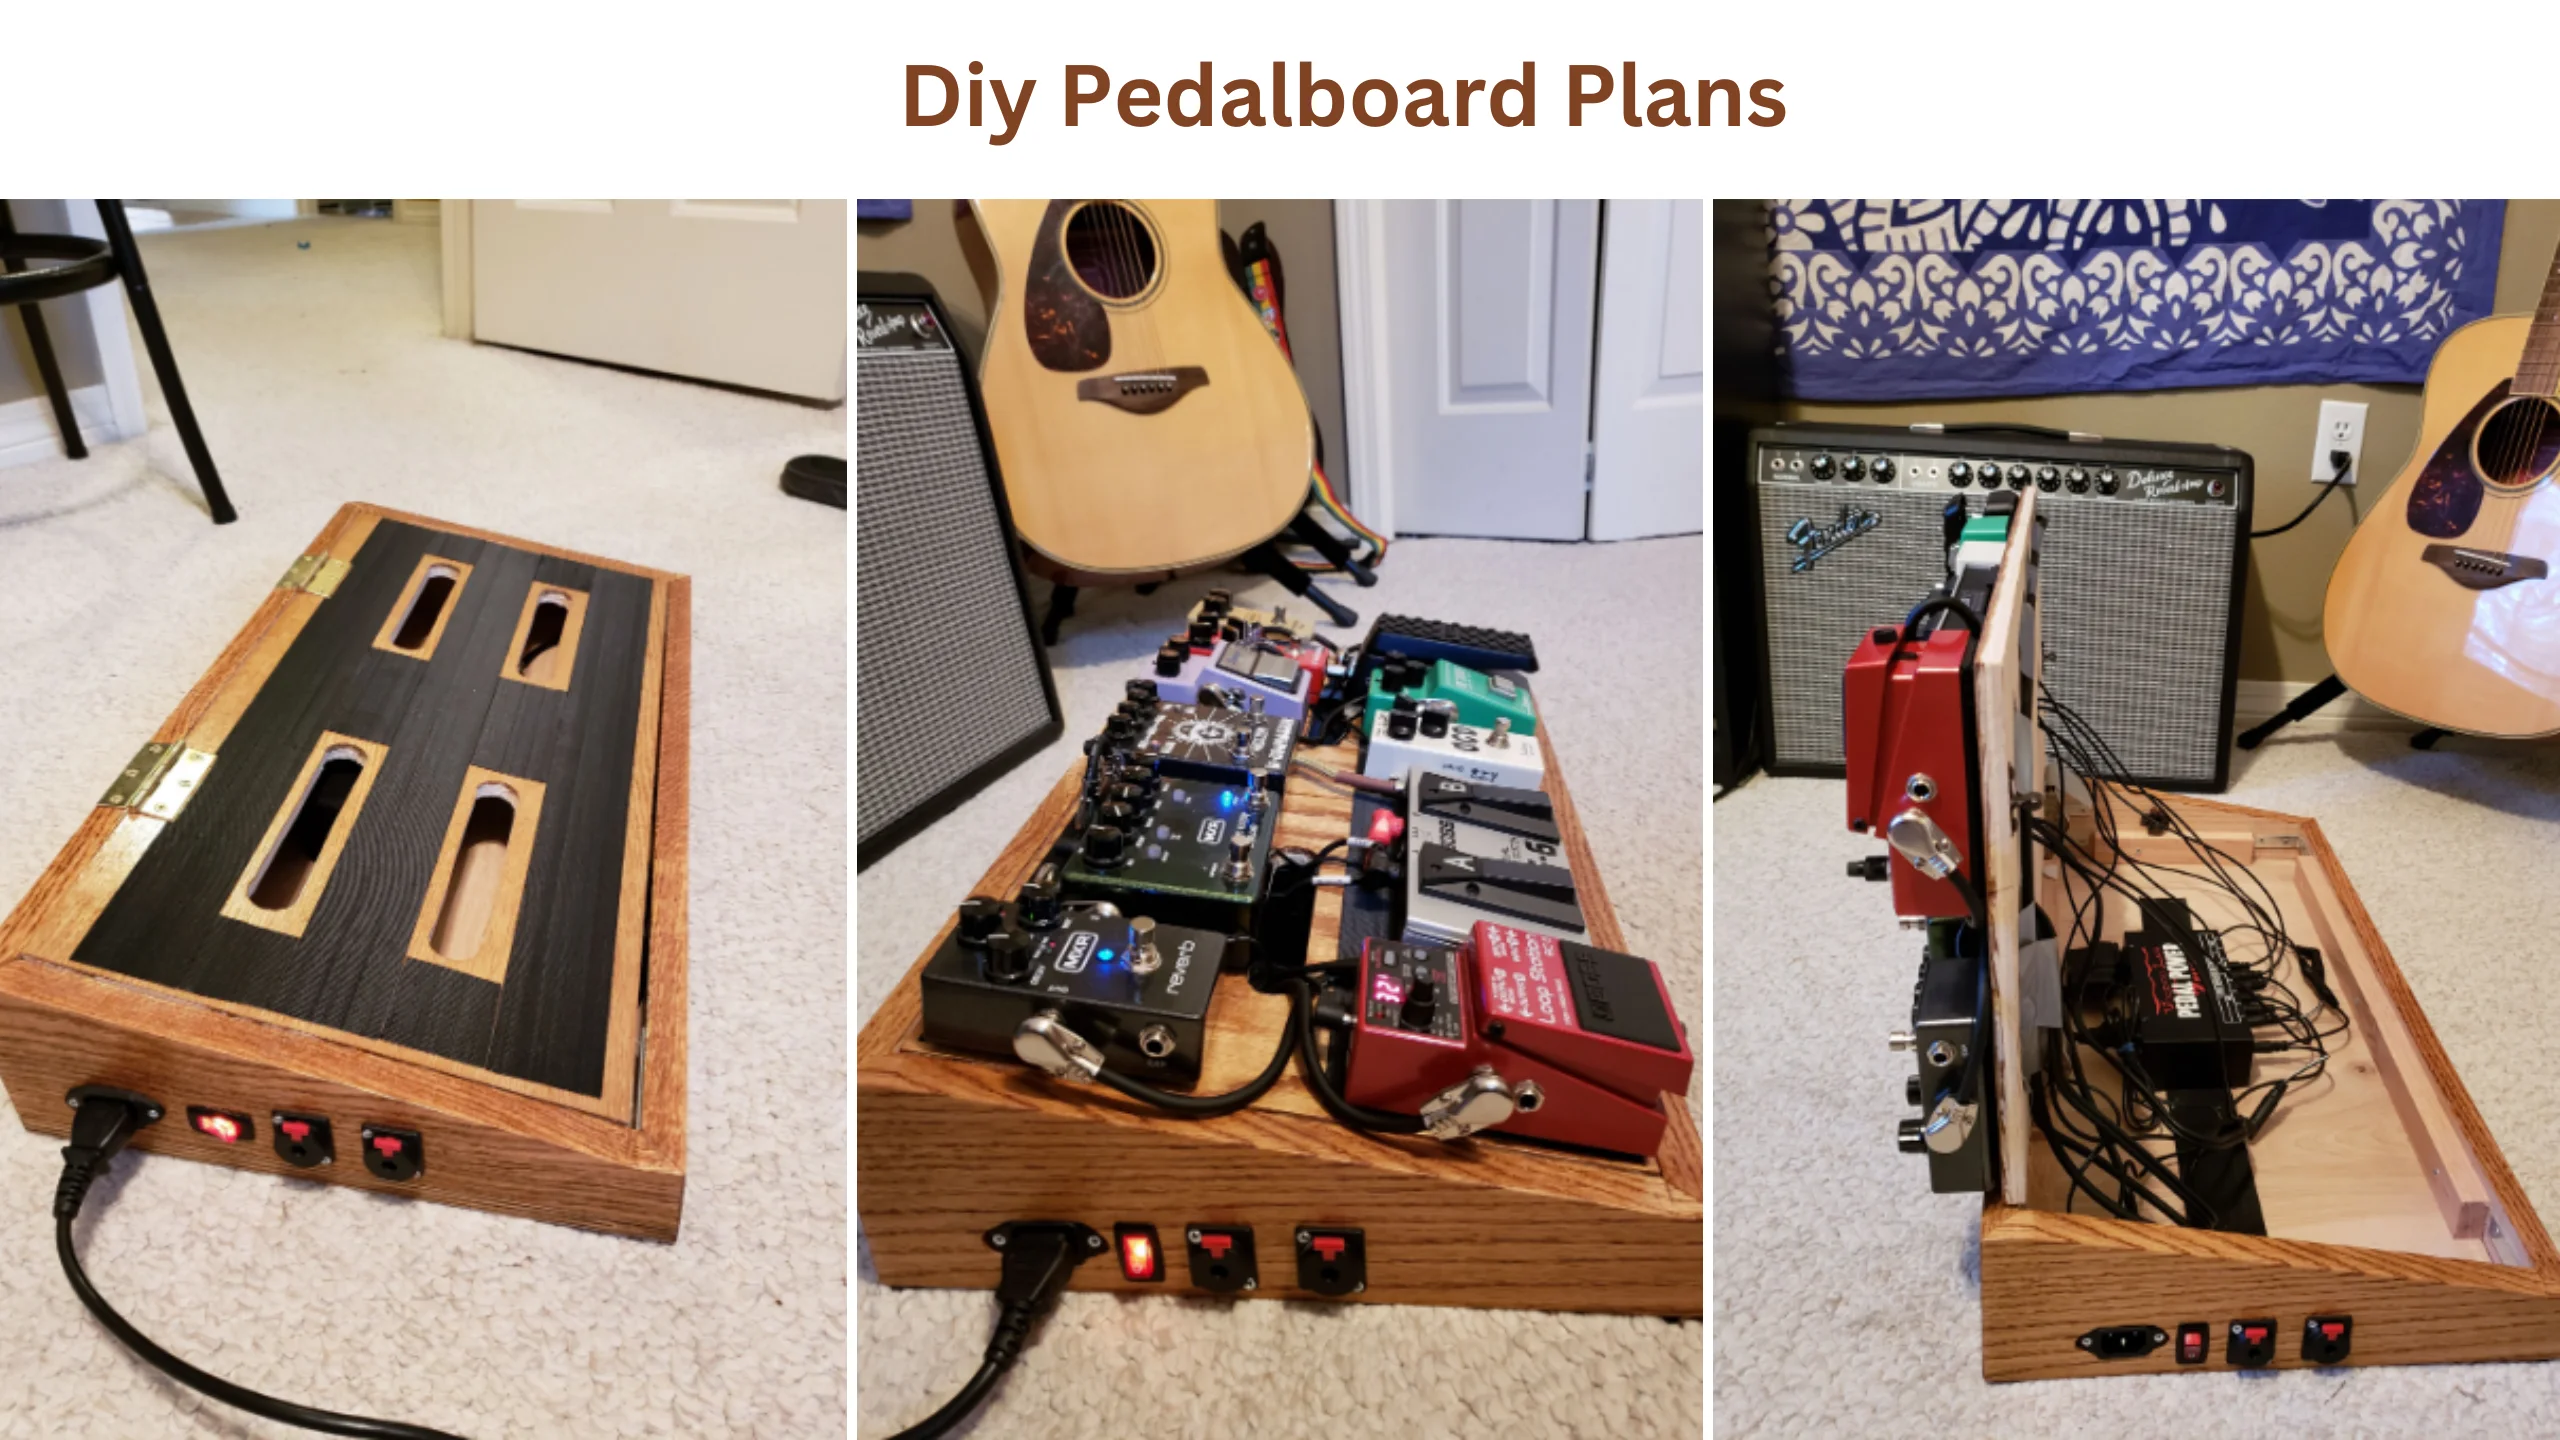 Diy pedalboard plans